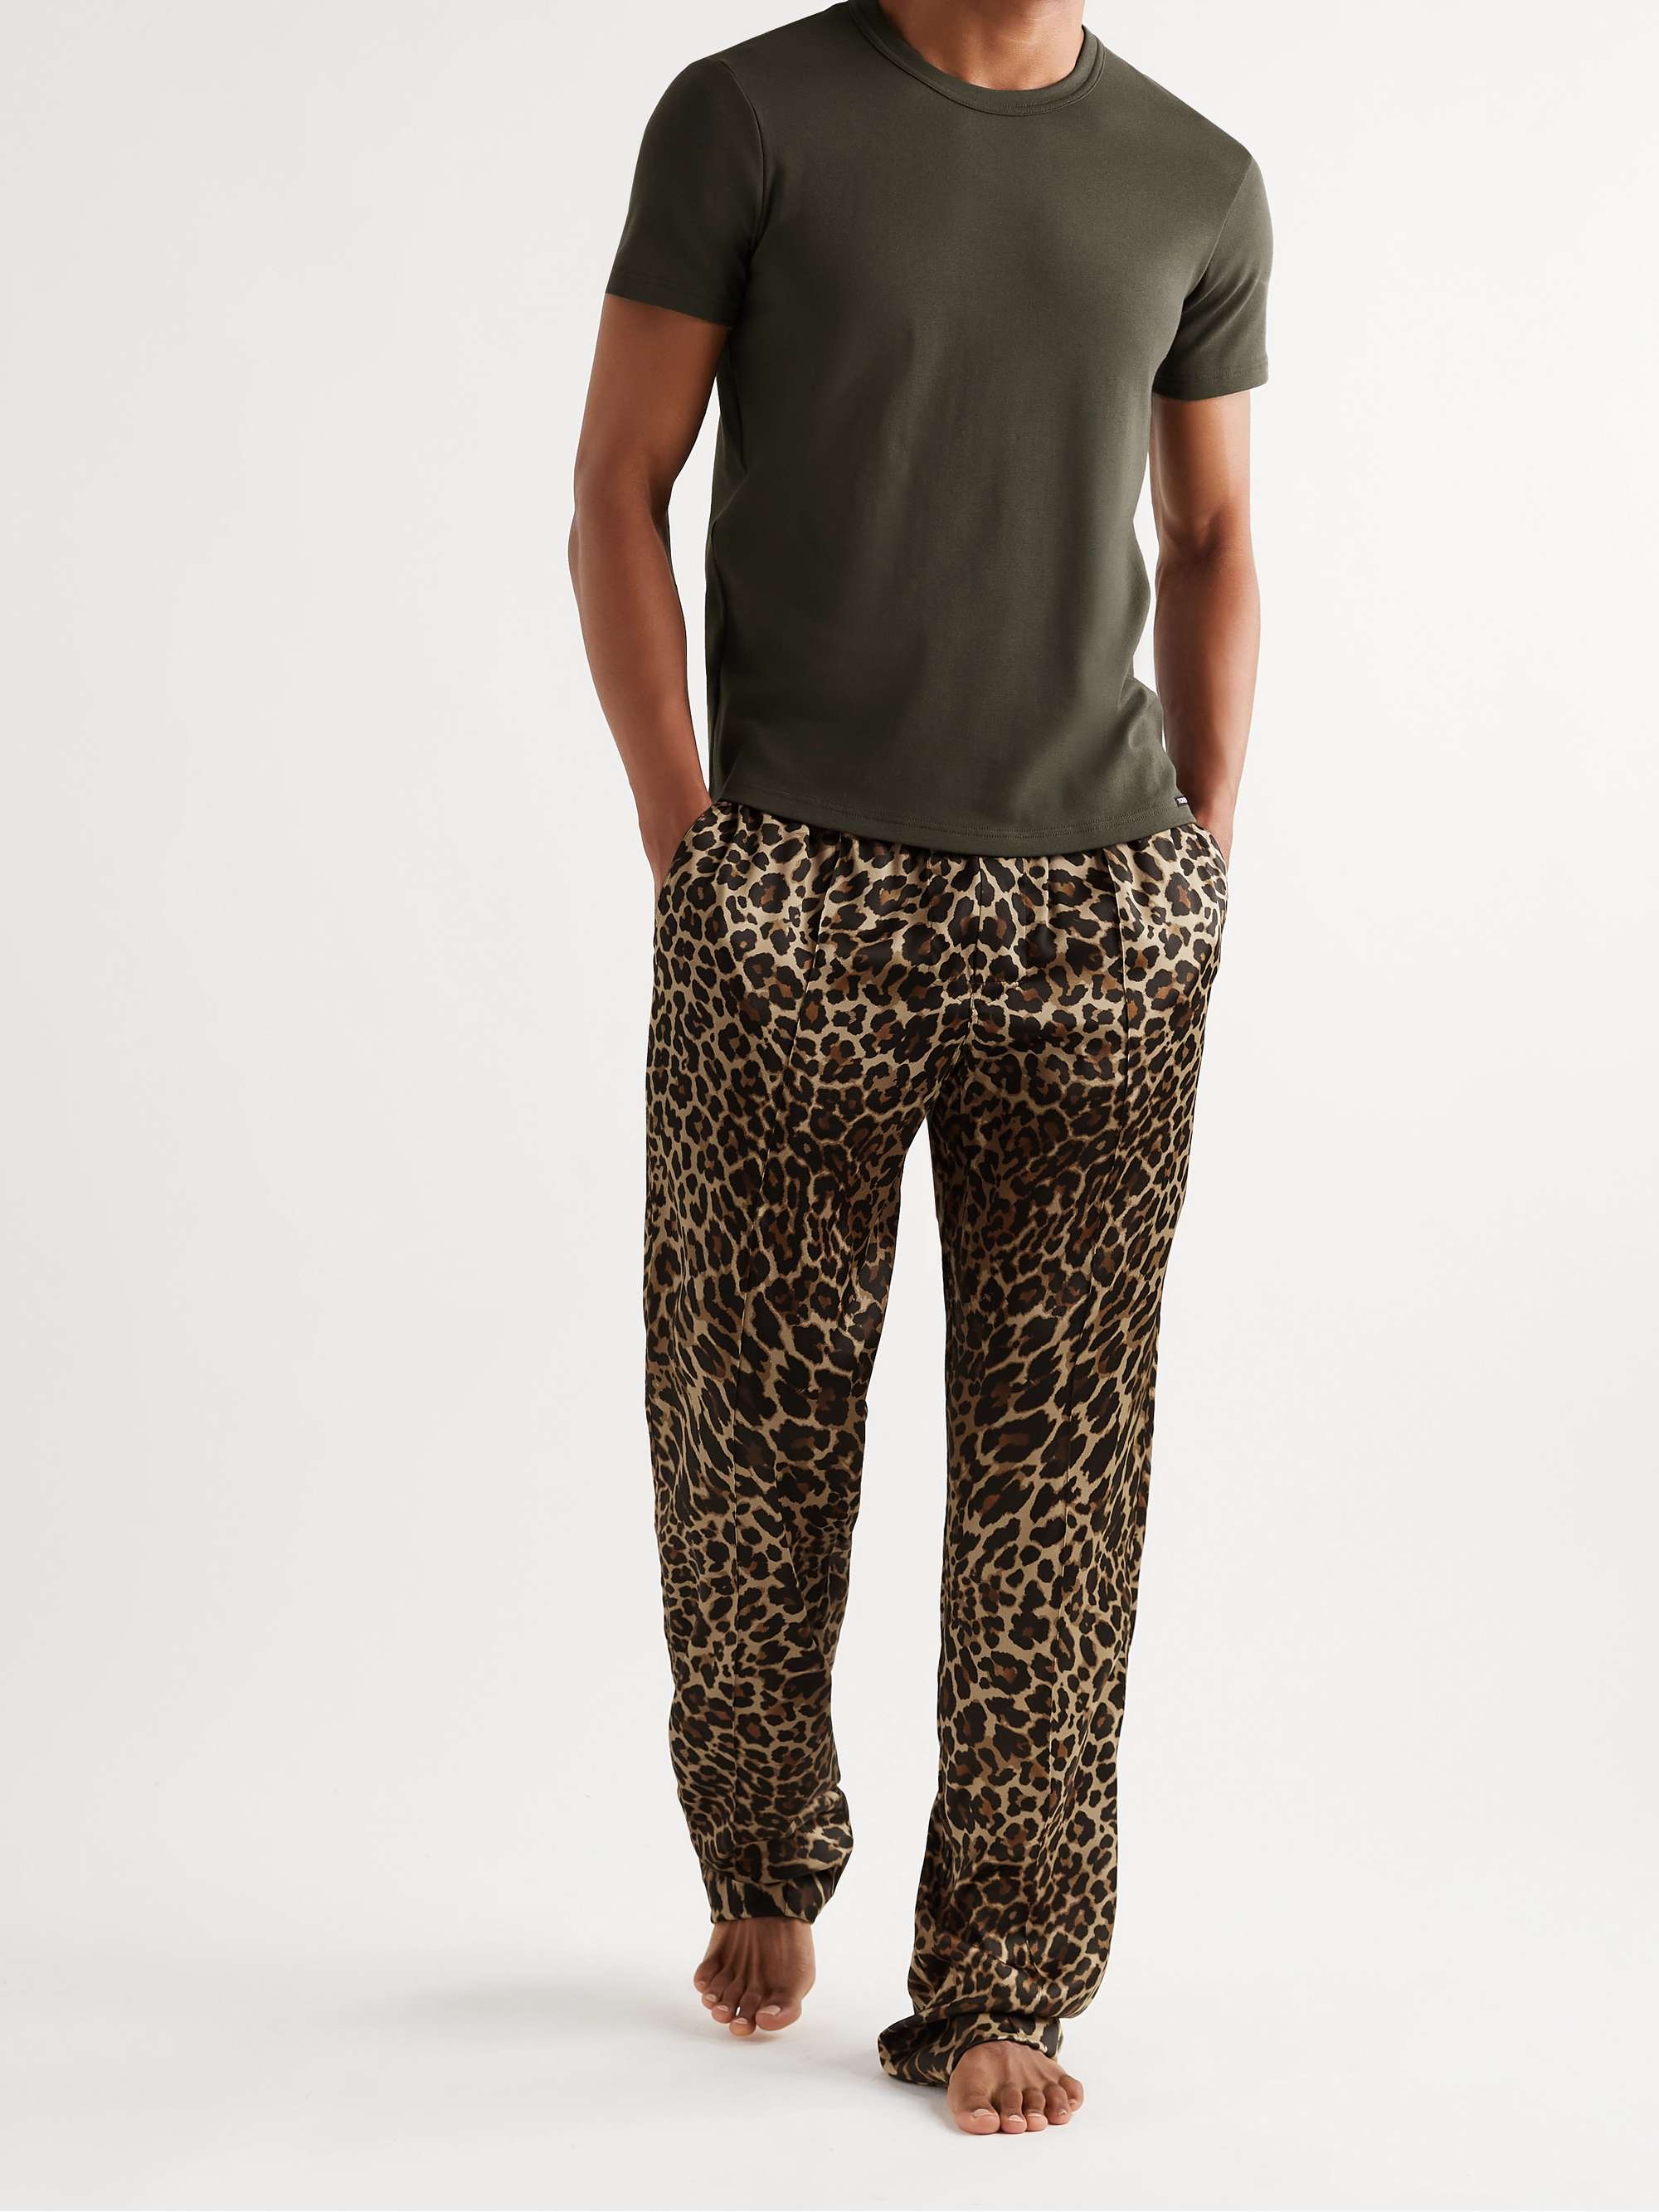 TOM FORD Velvet-Trimmed Leopard-Print Stretch-Silk Satin Pyjama Trousers